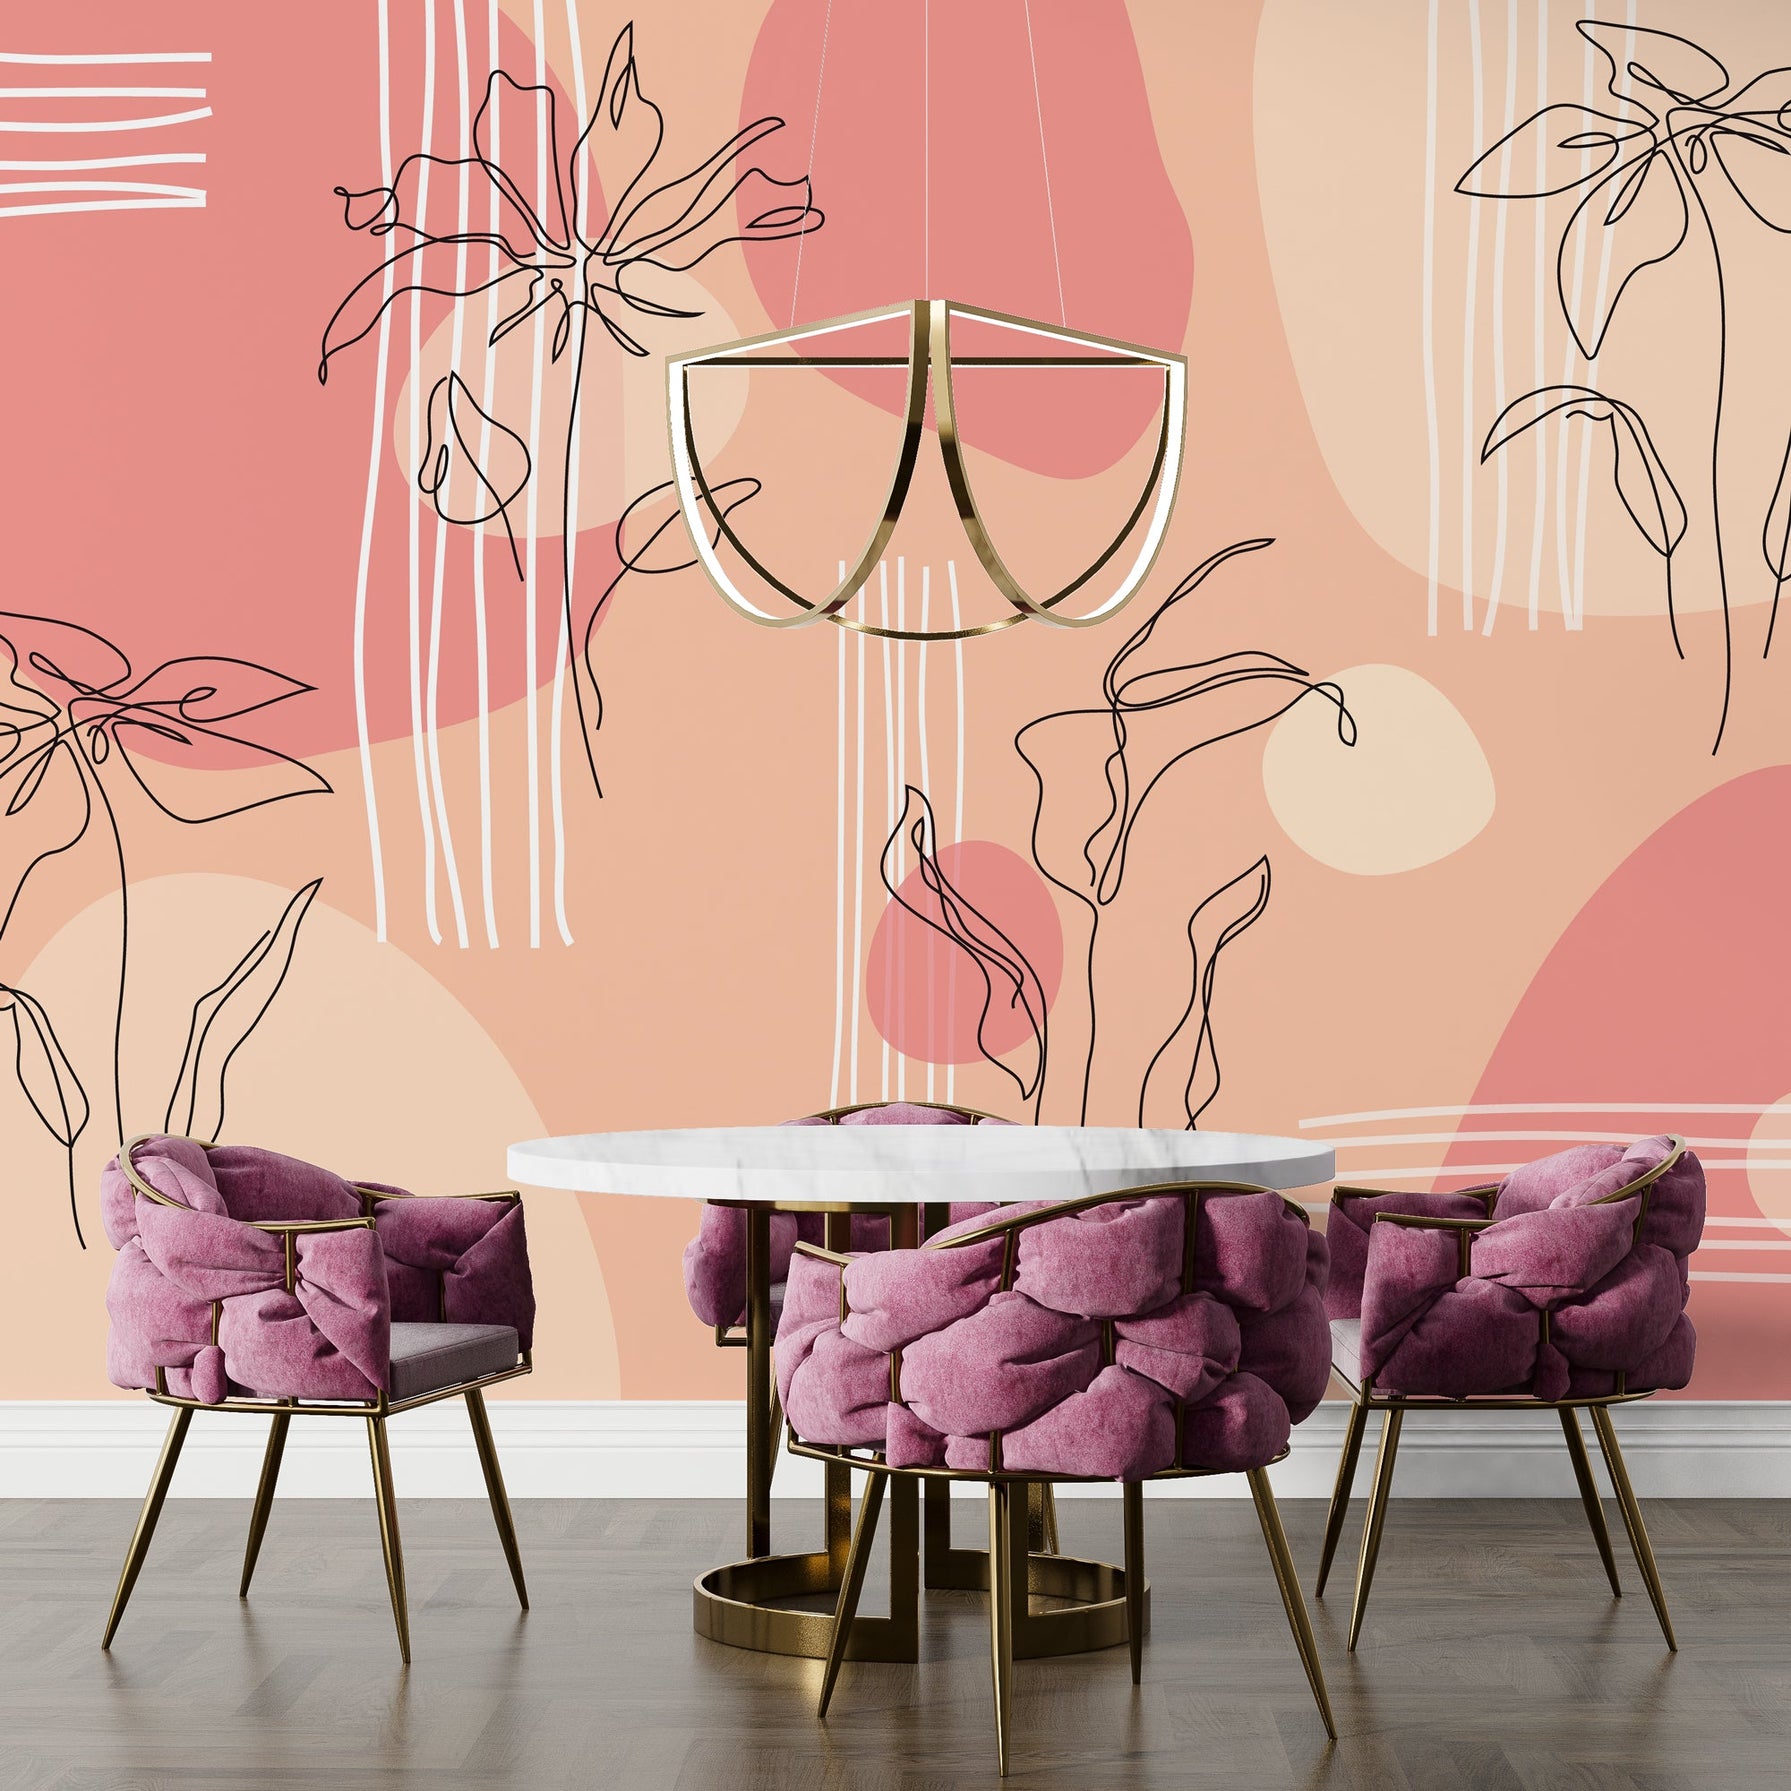 Matisse Line Art Wallpaper Mural: Exquisite Designs